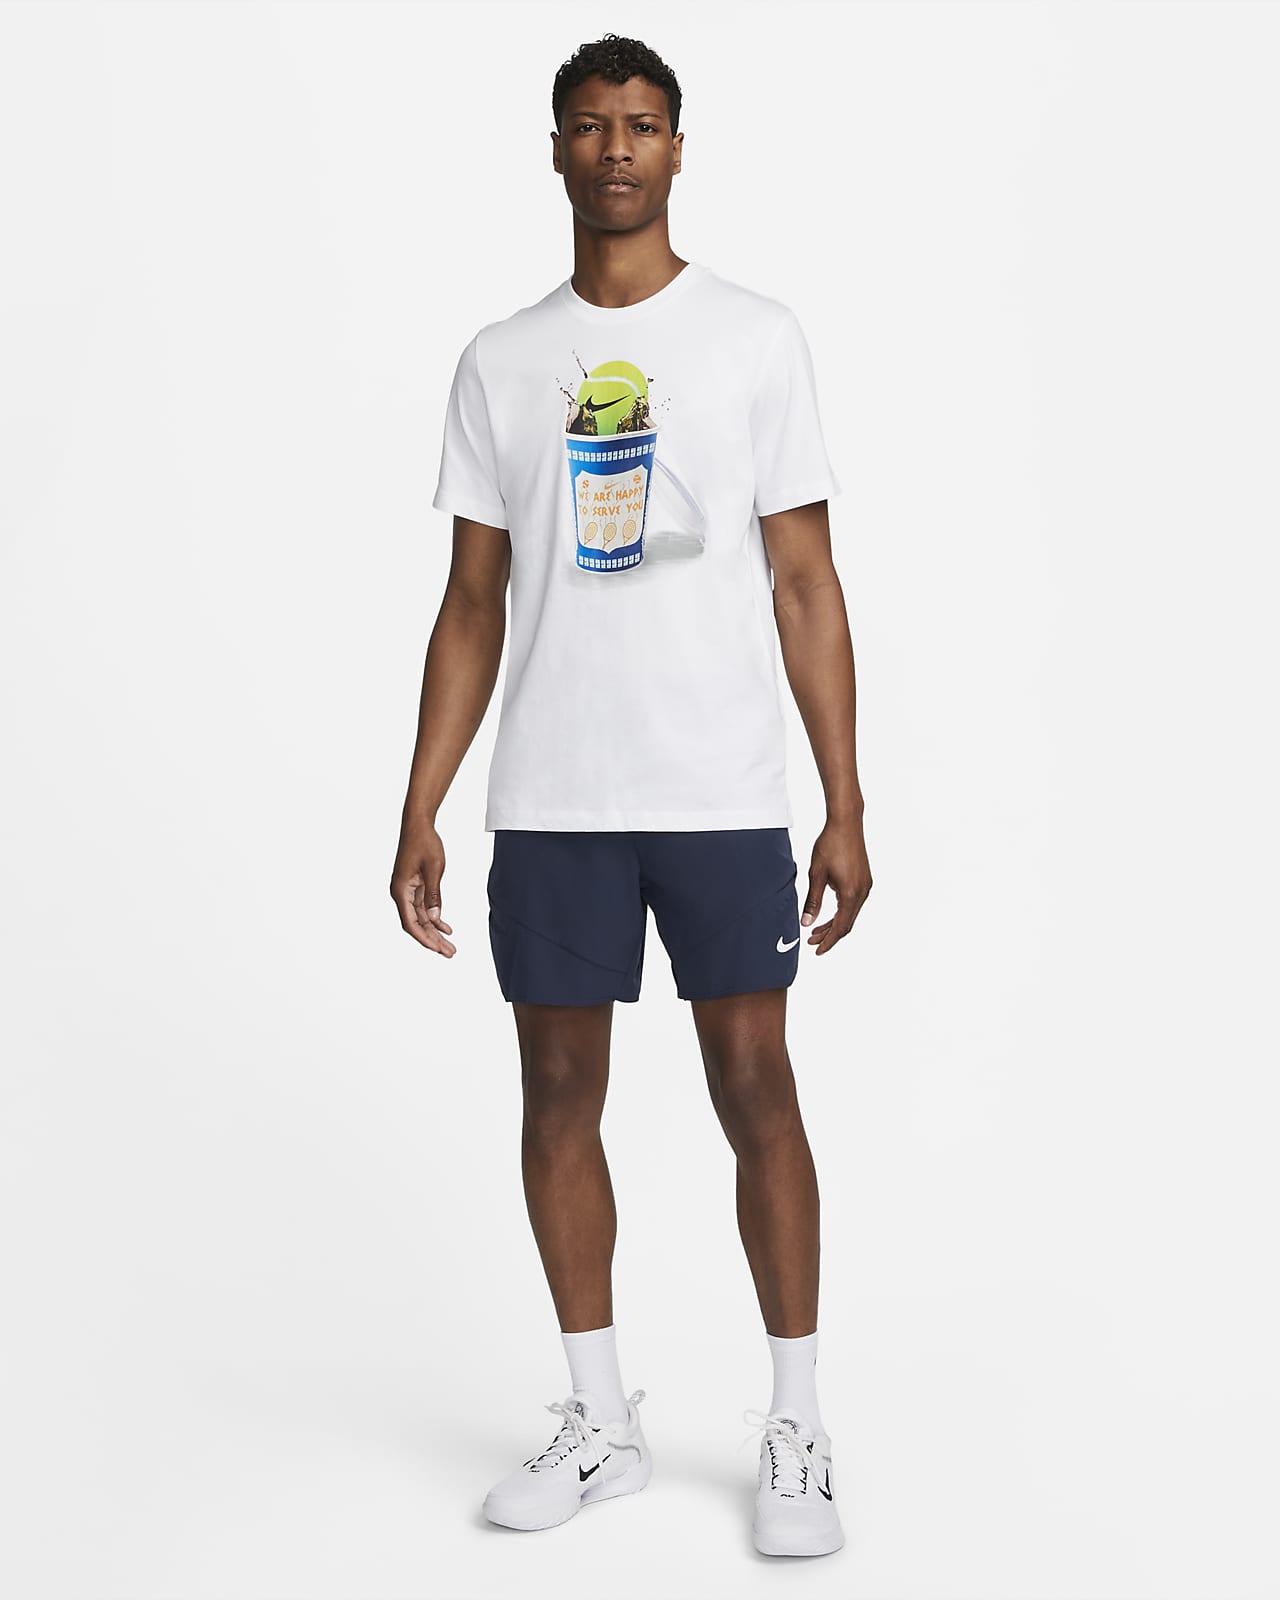 Nikecourt Men'S Tennis T-Shirt. Nike.Com